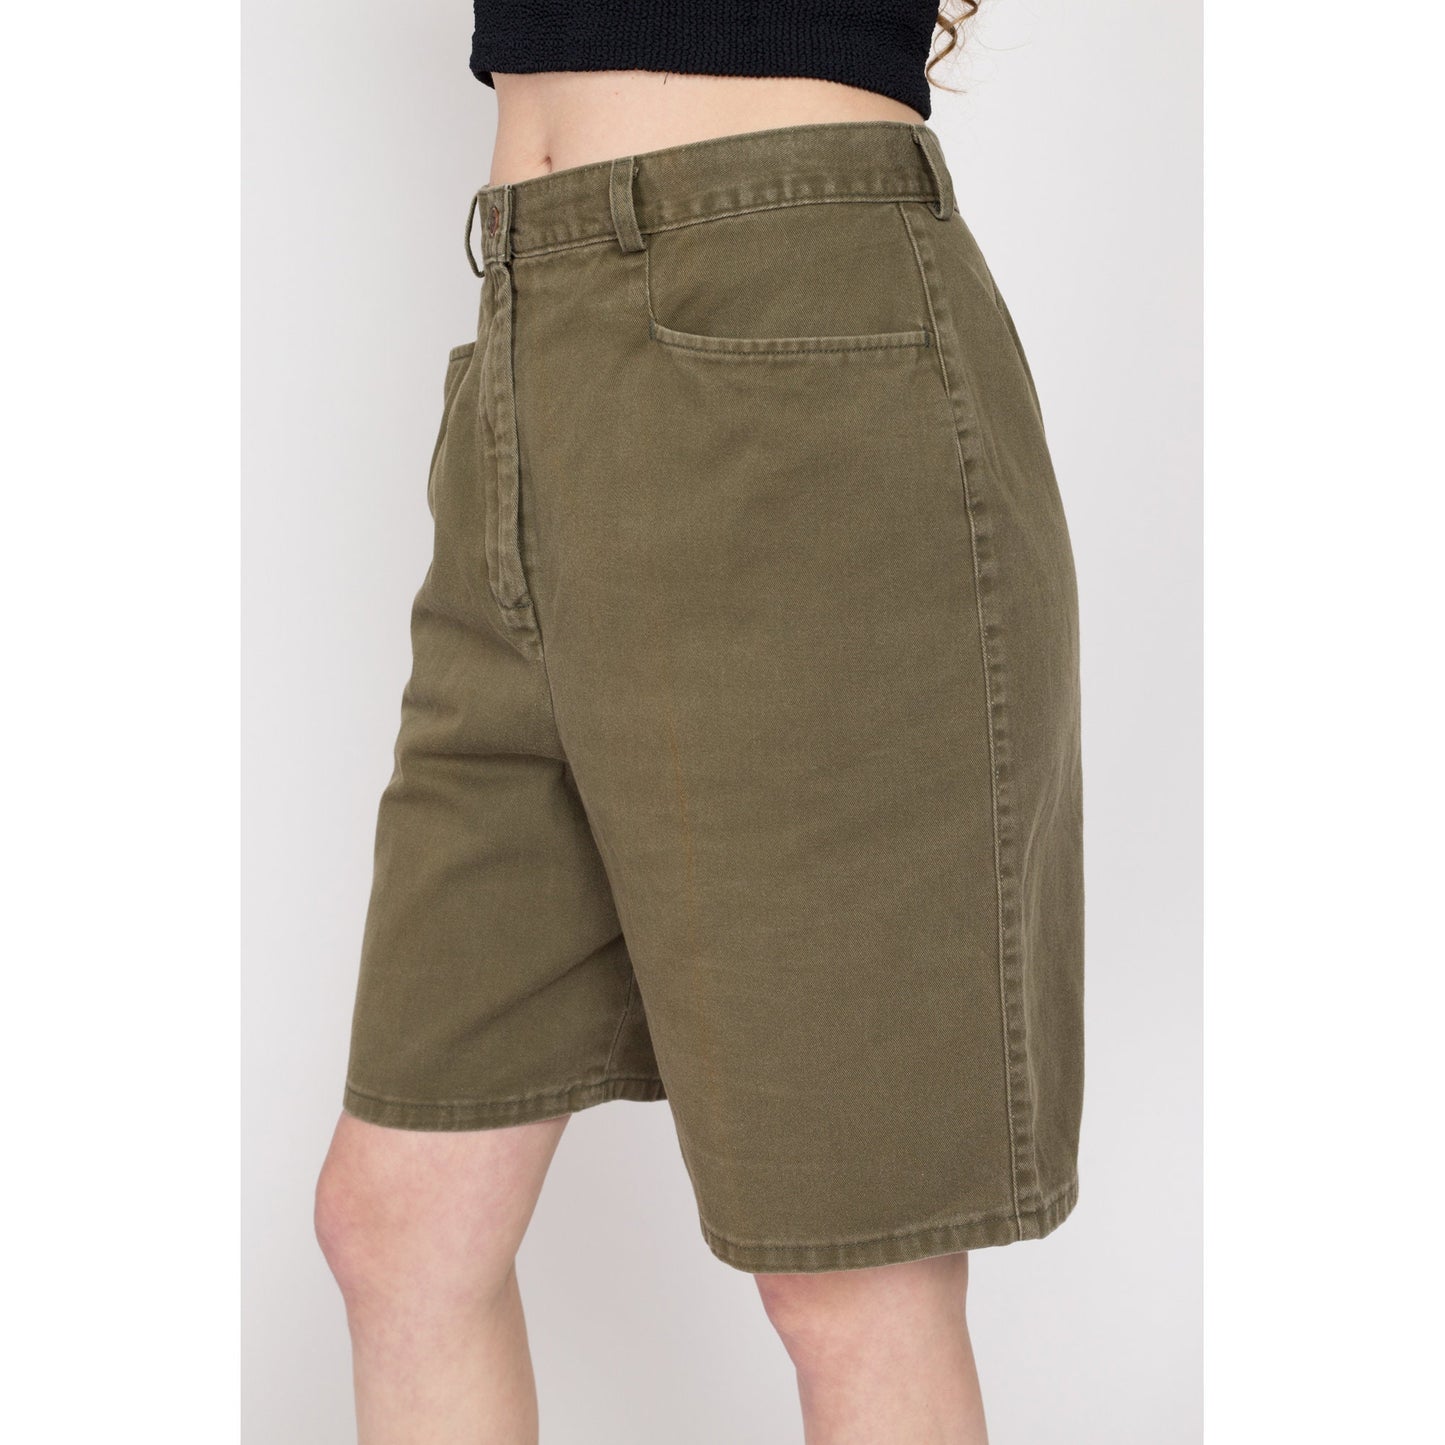 Medium 90s Olive Green Jean Shorts 29.5" | Vintage High Waisted Denim Mom Shorts